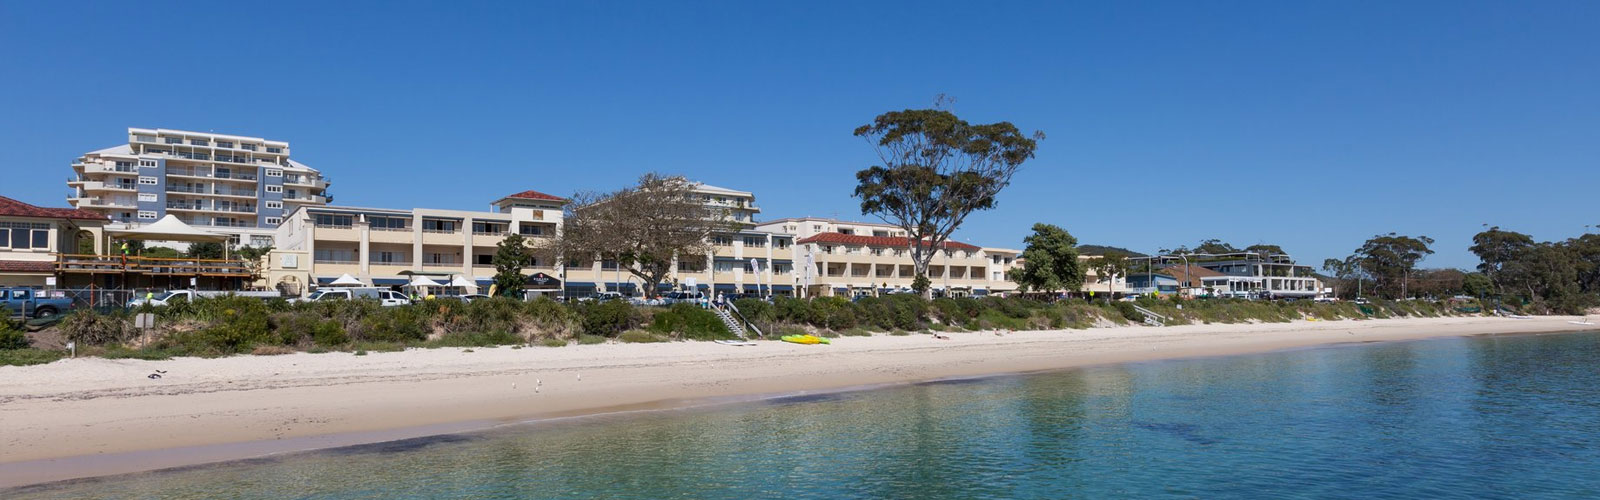 Ramada – Shoal Bay Resort, Port Stephens